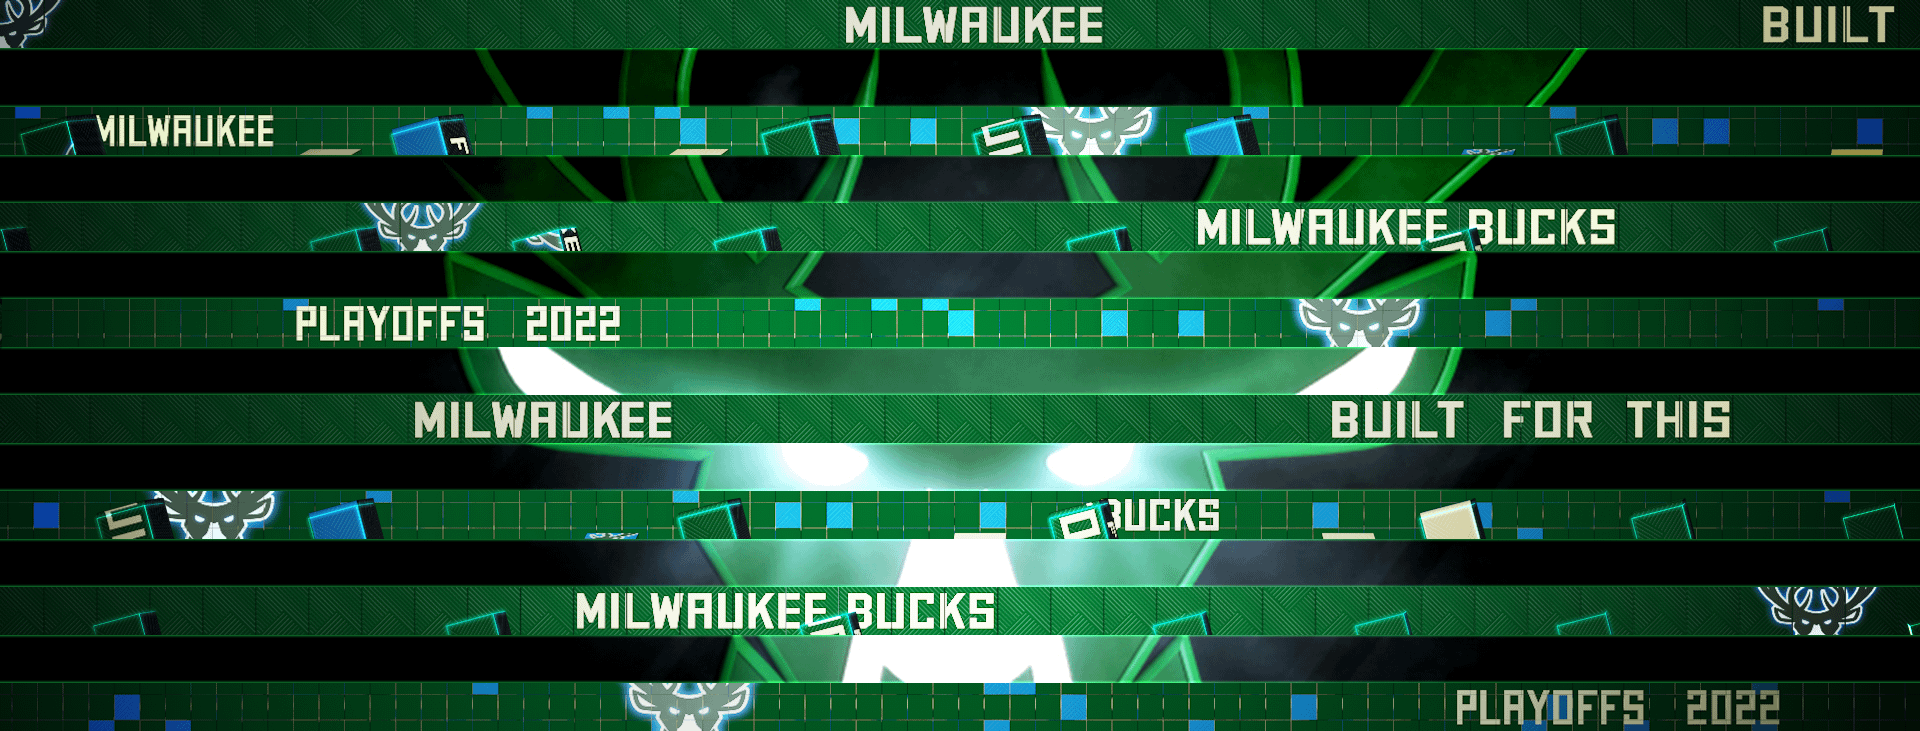 Milwaukee Bucks (NBA): Stadium Graphics Package.